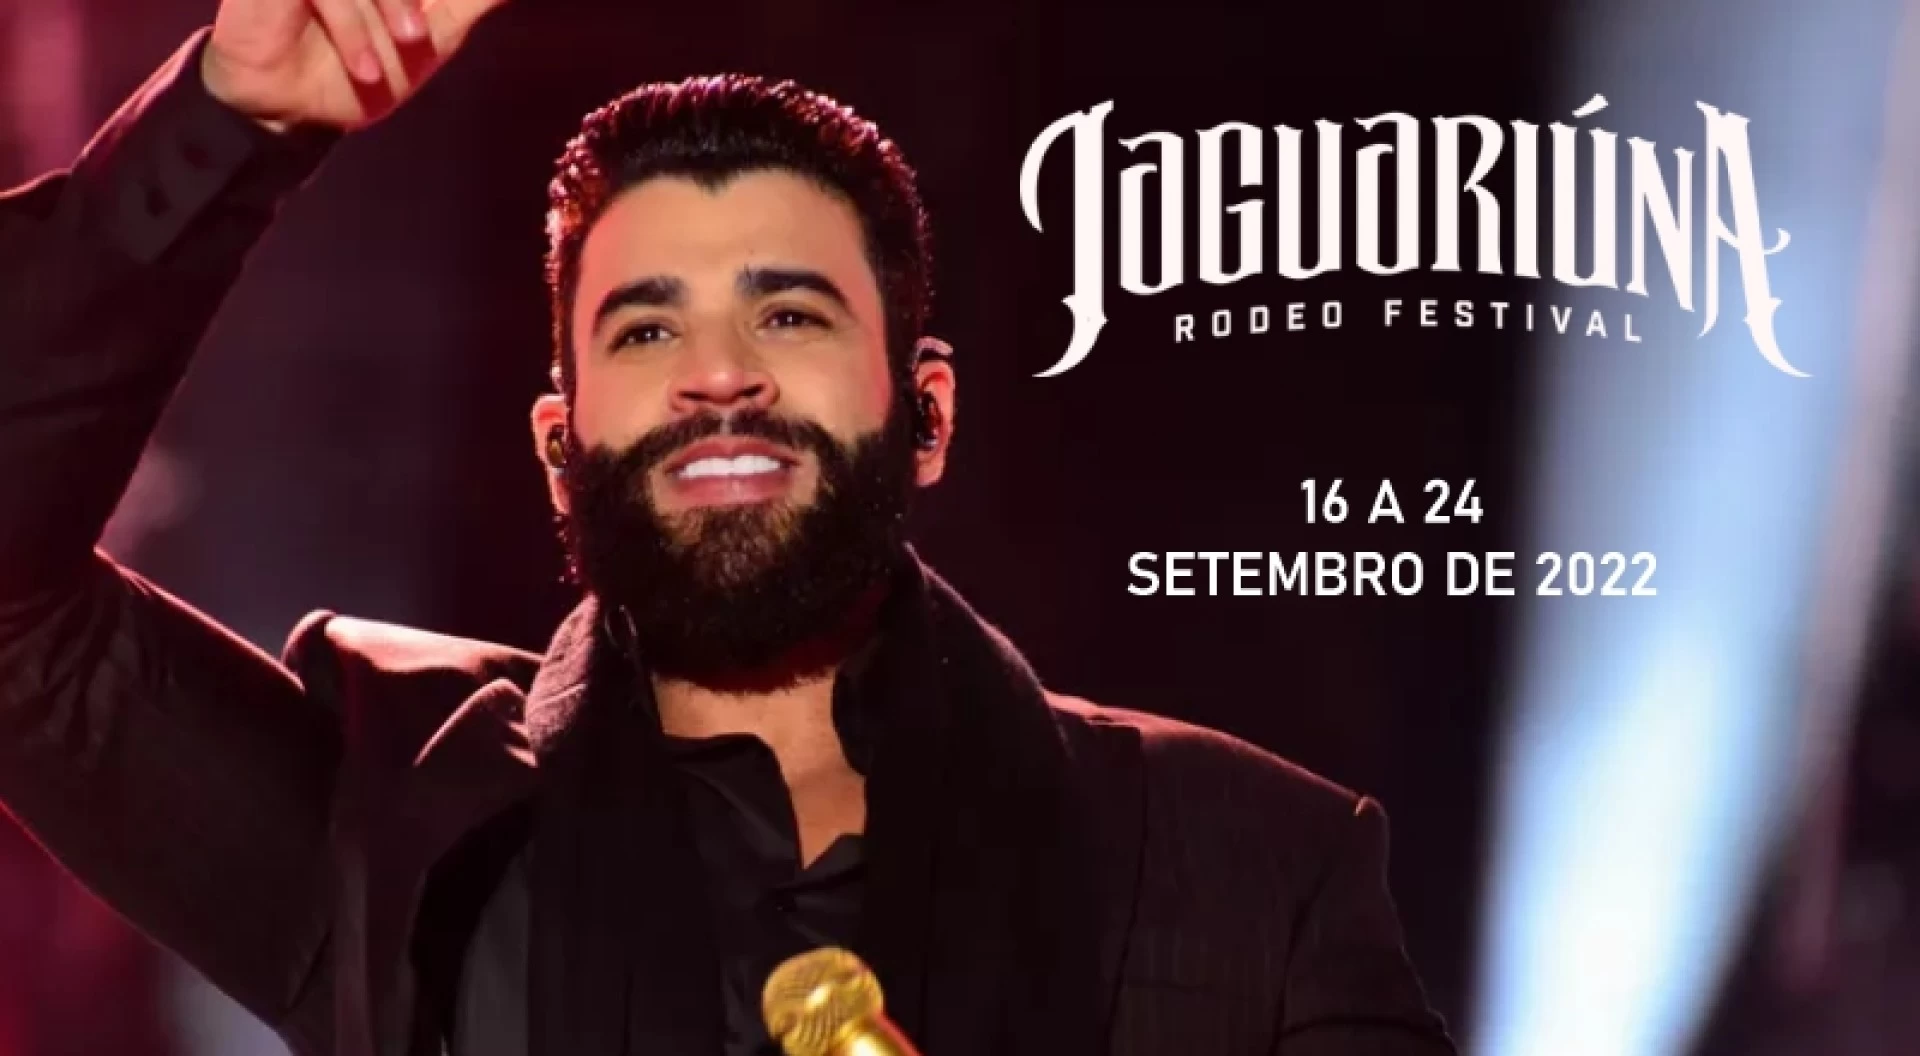 Jaguariúna Rodeo Festival 2022 é na Total Acesso.